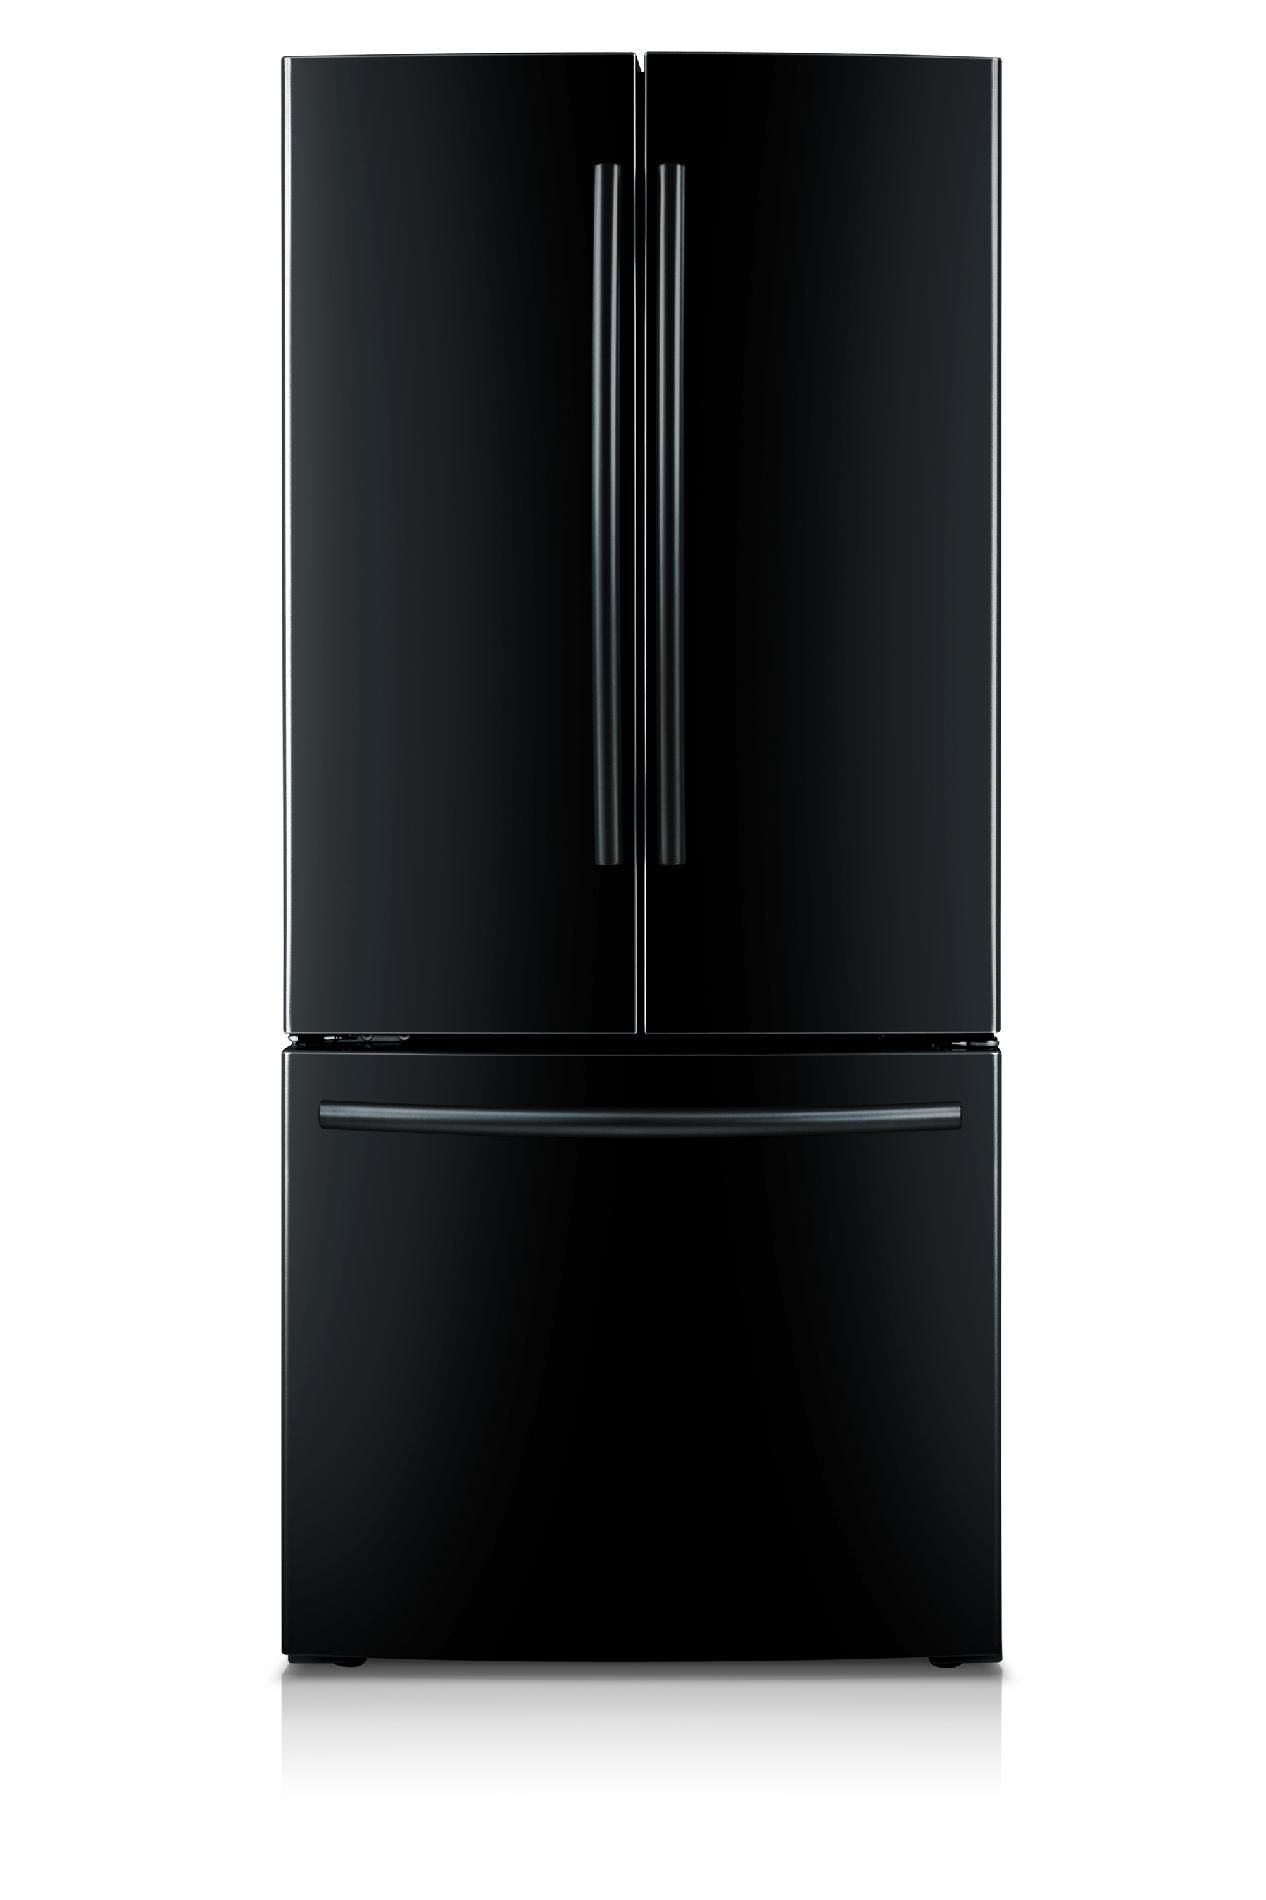 Samsung 22 cu. ft. French Door Refrigerator - Black